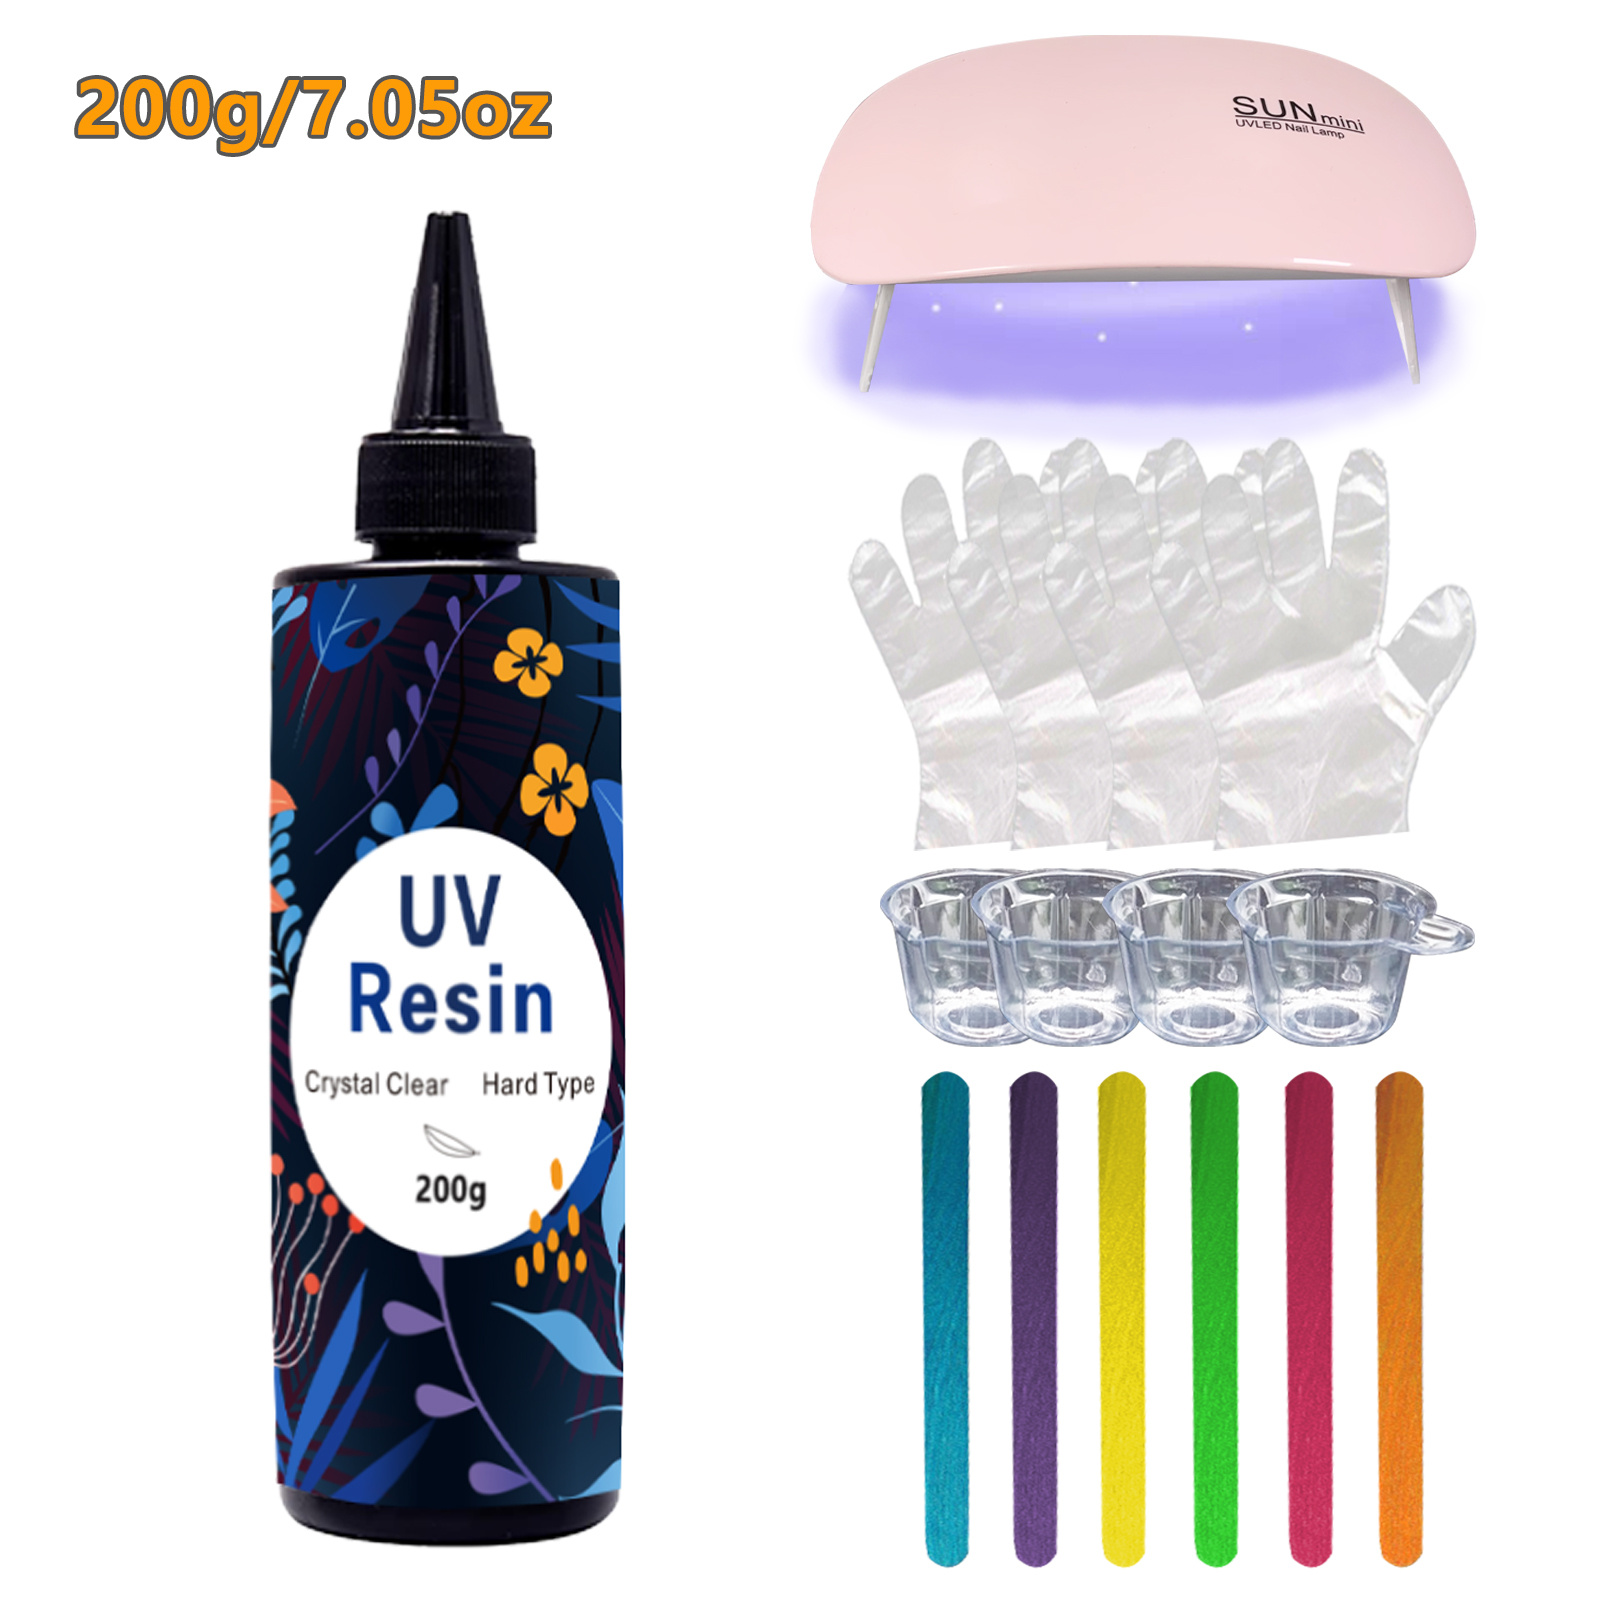  UV Resin - 200g Crystal Clear UV Resin Kit, UV Glue